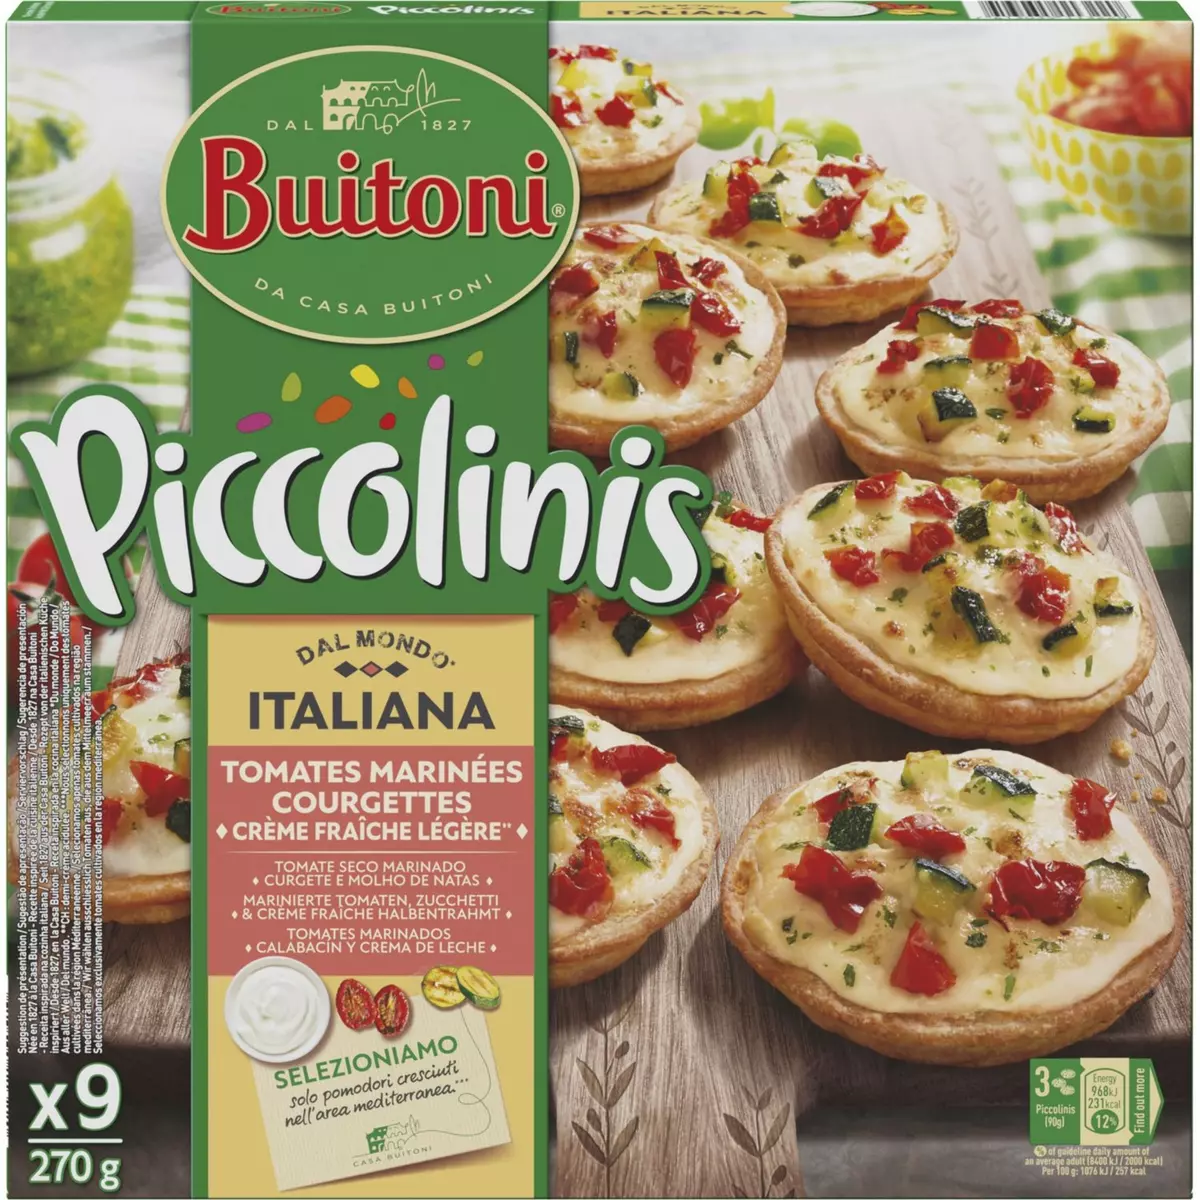 BUITONI Piccolinis mini pizza Italienne 9 pièces 270g